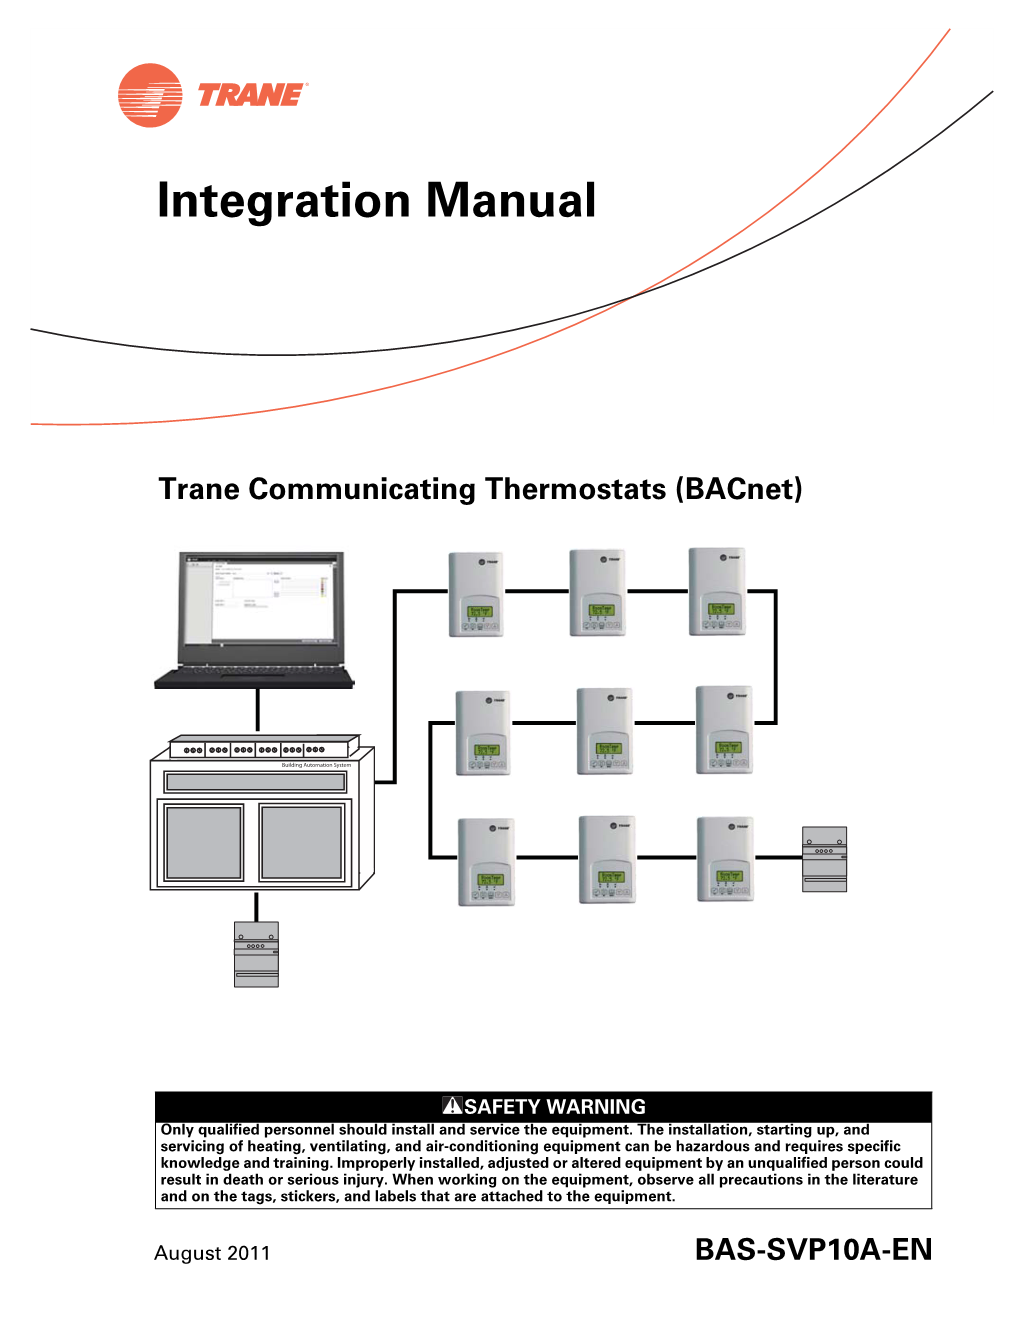 Trane Communicating Thermostats (Bacnet) Integration Manual